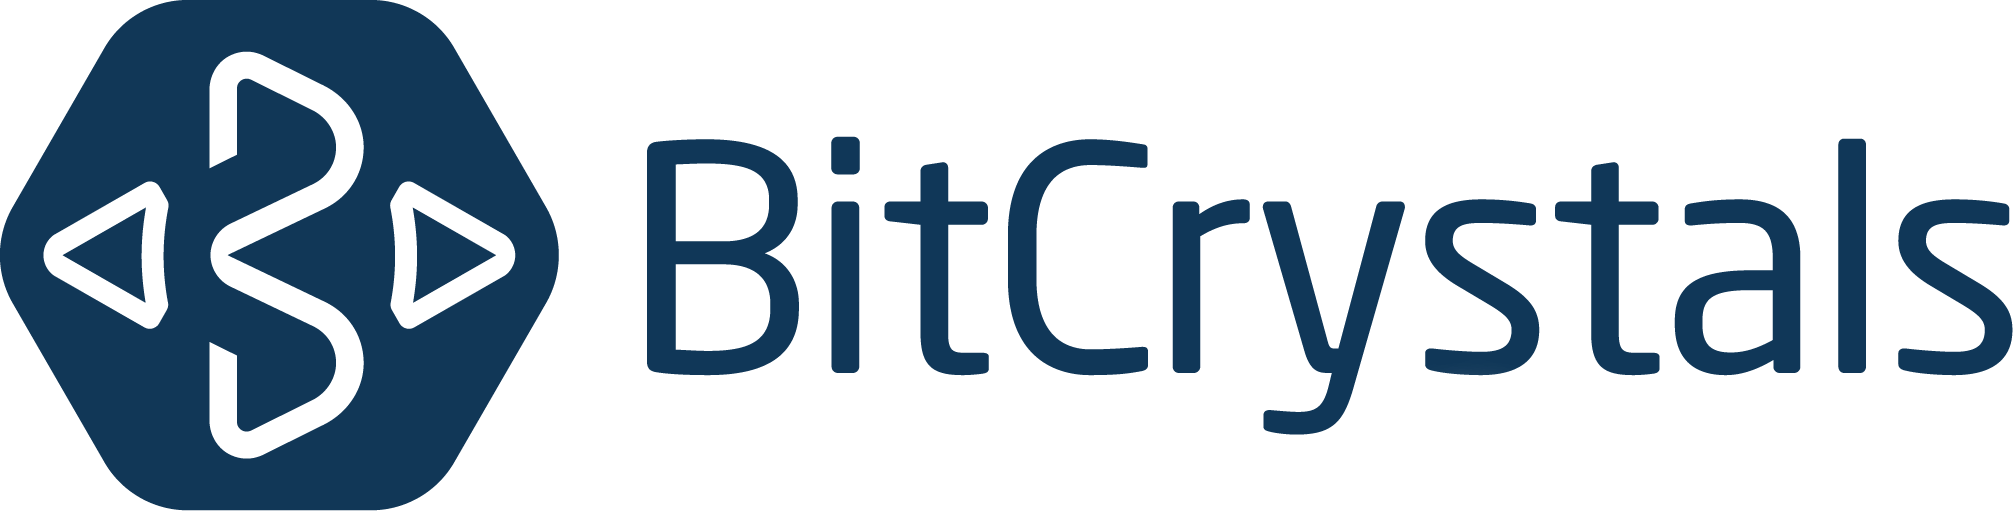 BitCrystals Logo